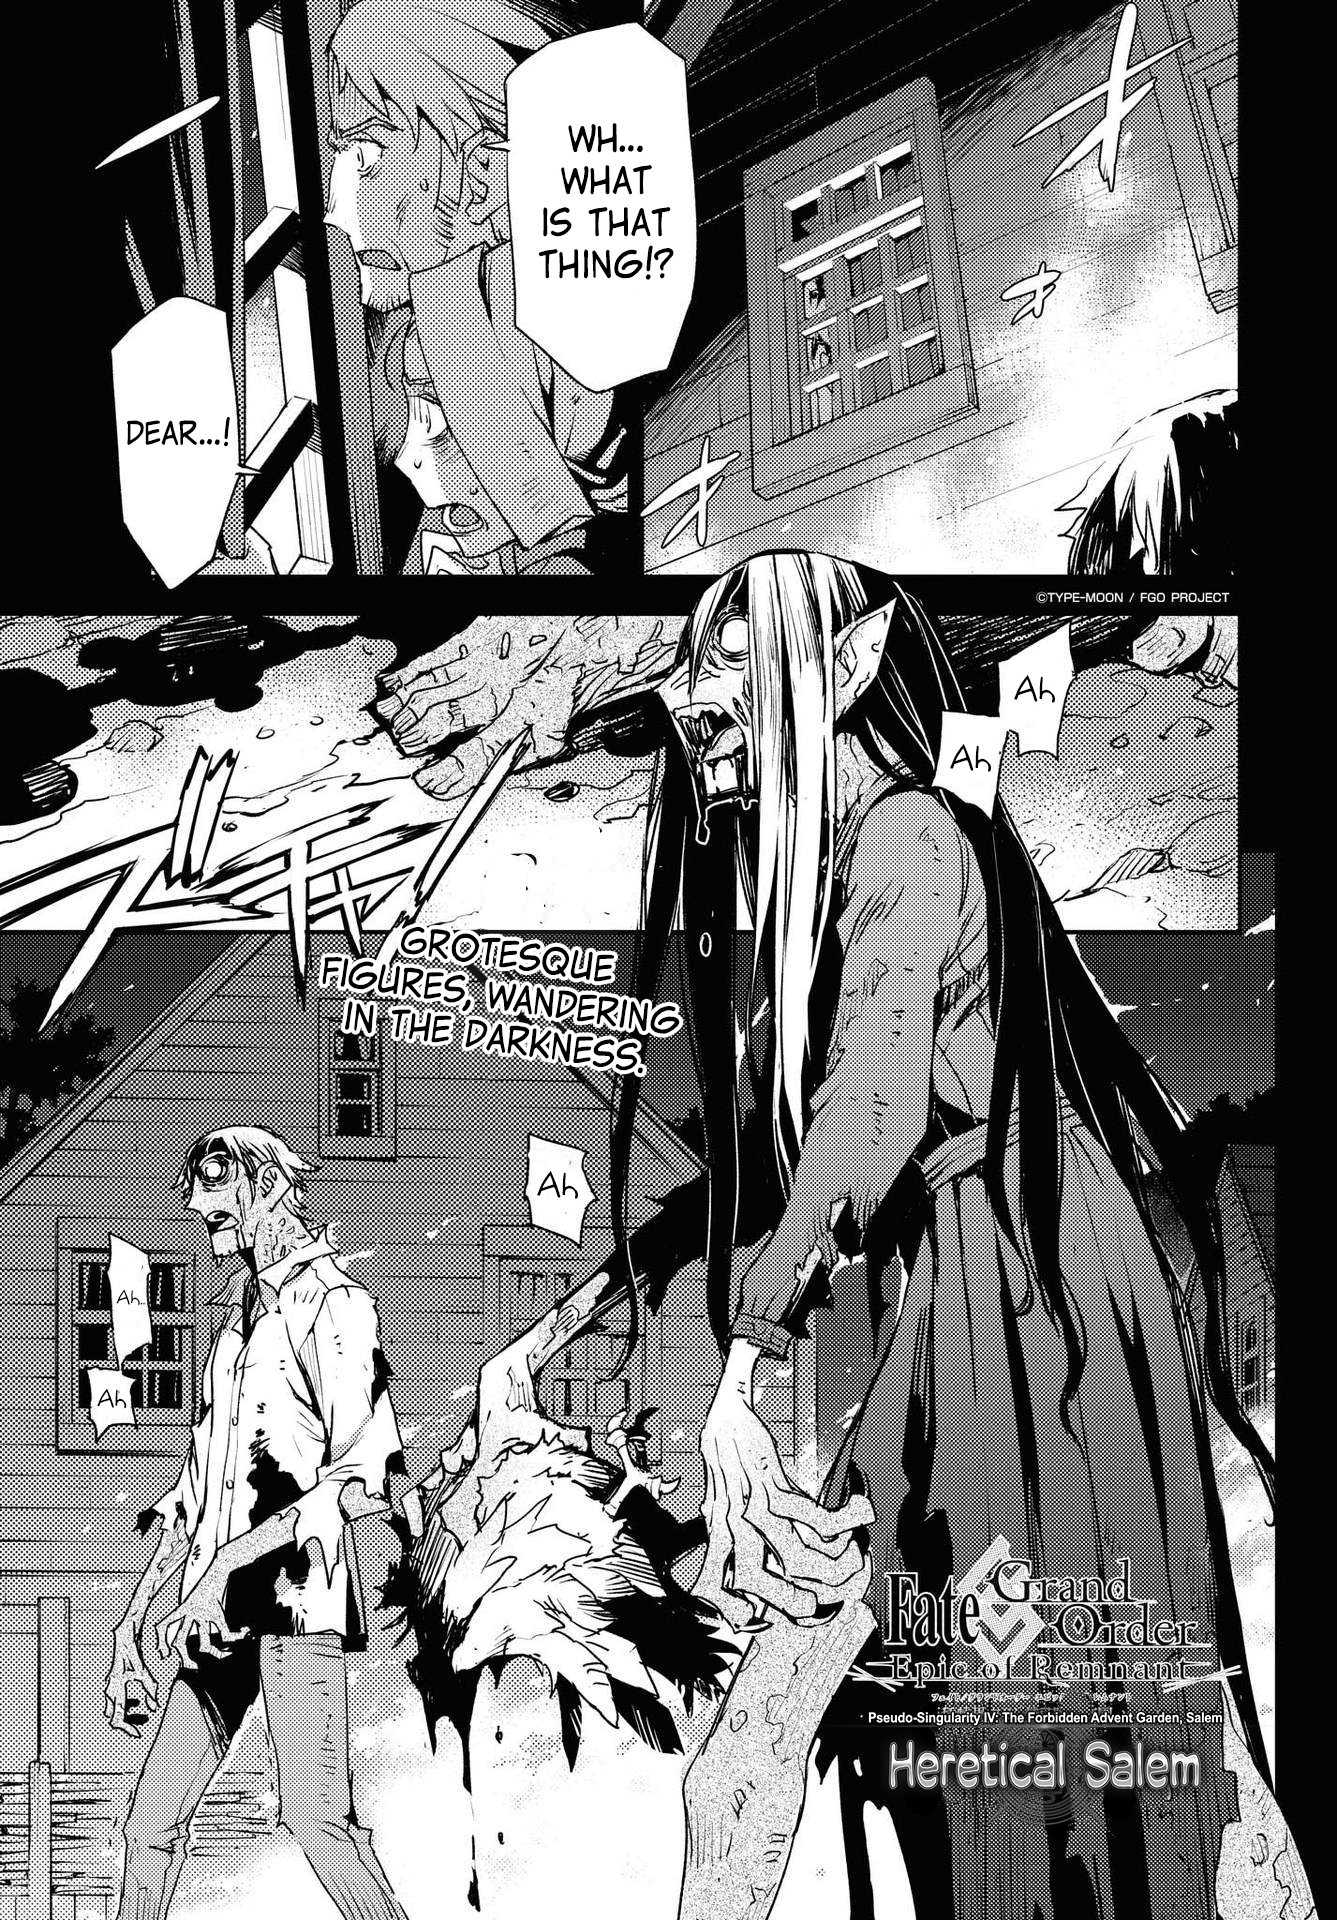 Fate/grand Order: Epic Of Remnant: Pseudo-Singularity Iv: The Forbidden Advent Garden, Salem - Heretical Salem - Page 1